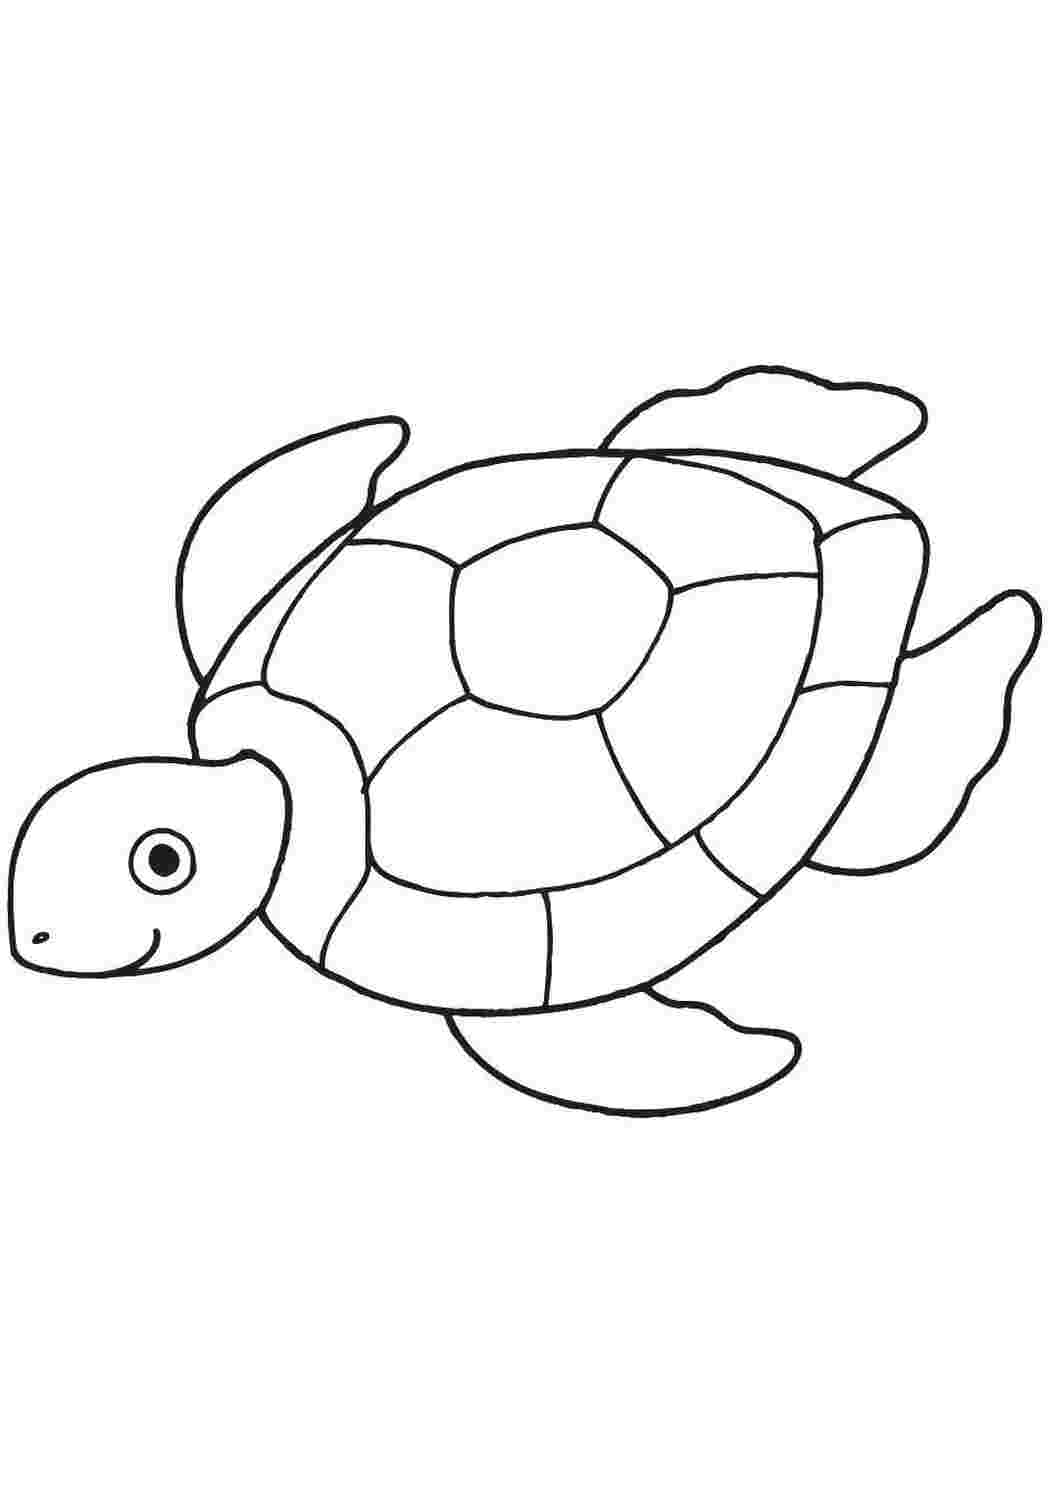 Степная черепаха раскраска